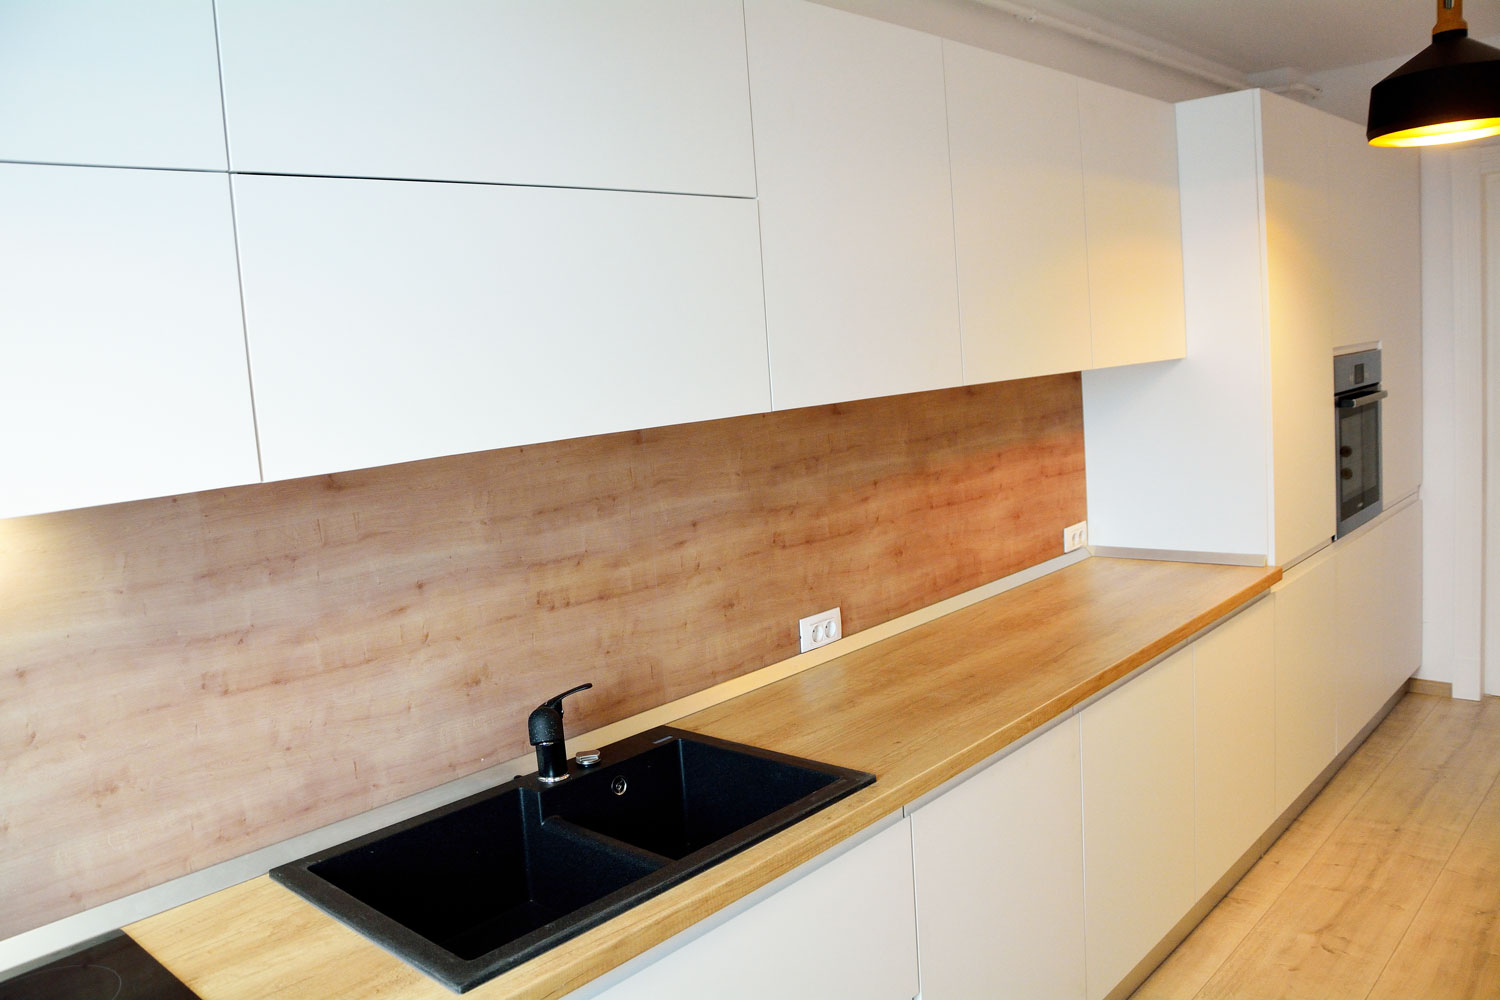 Kitchen wood countertops